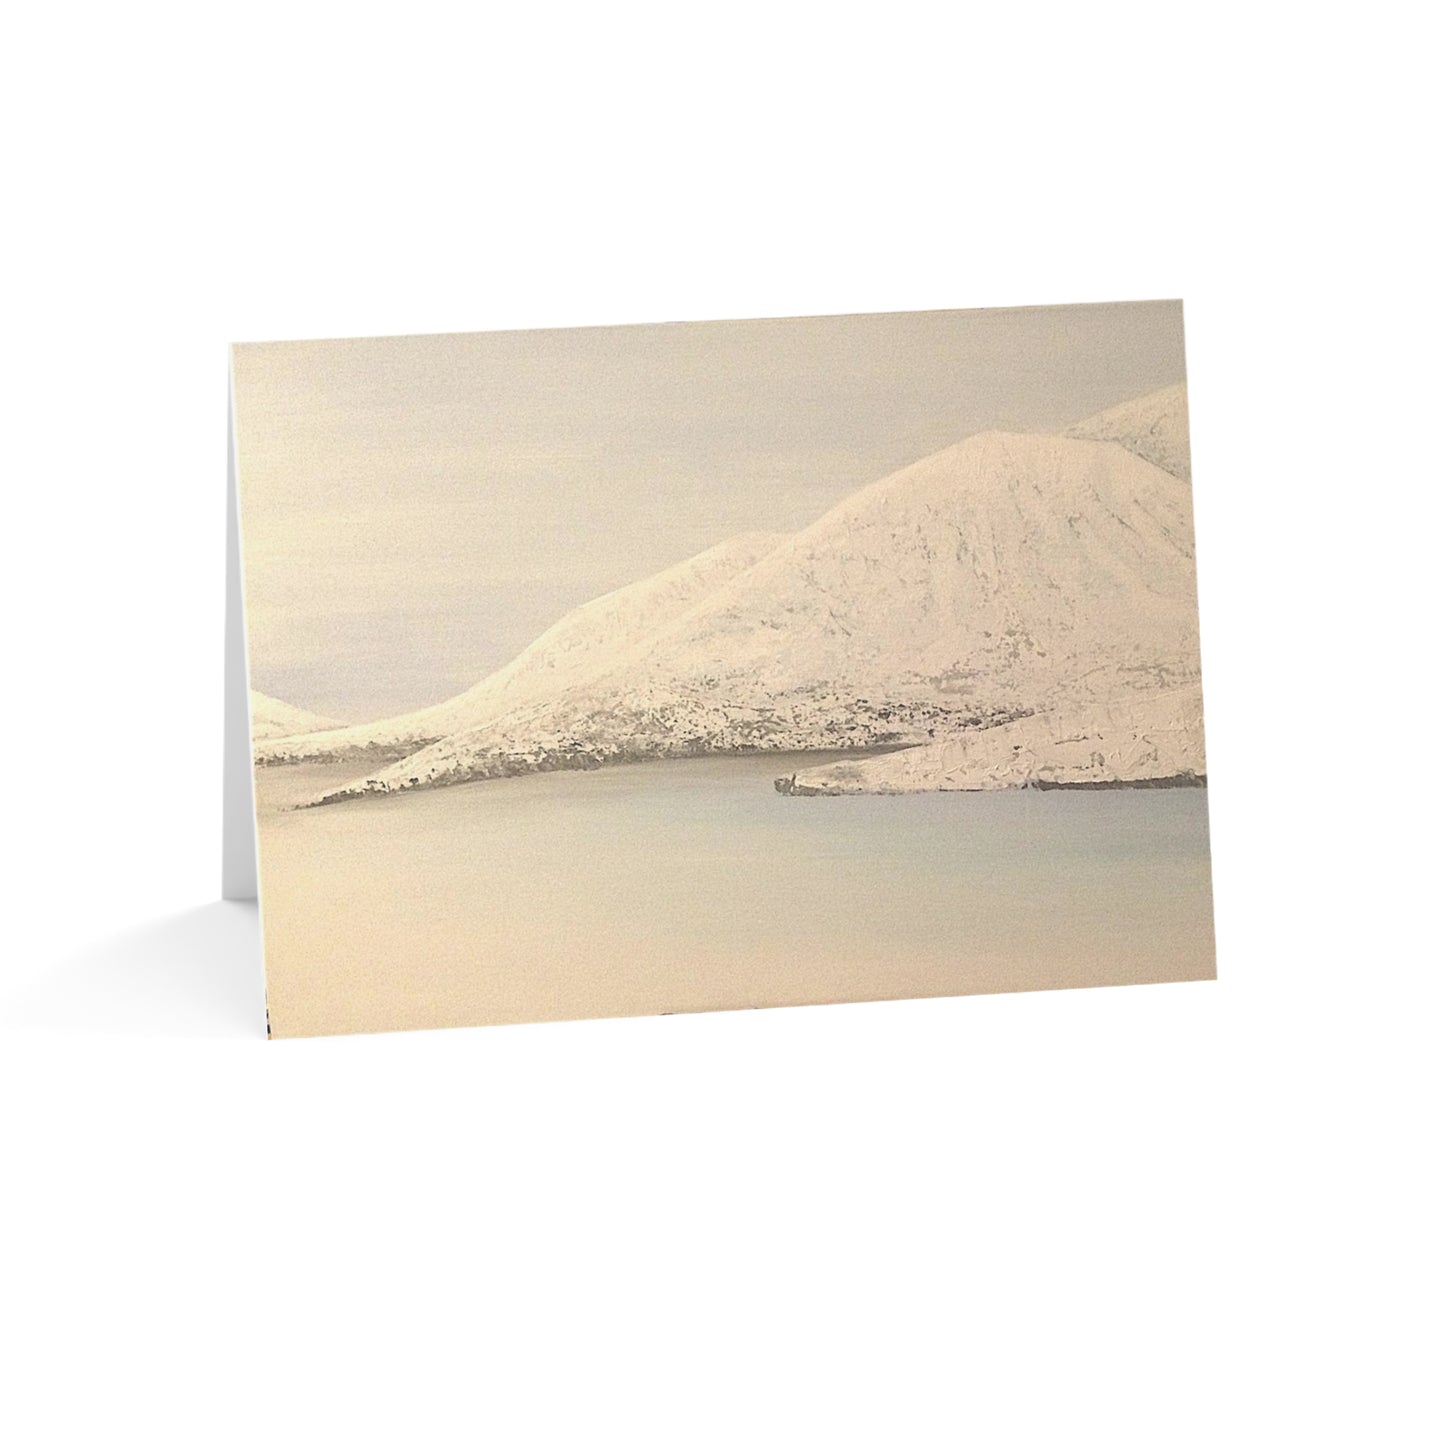 Greeting Cards - Salt lake 1, 10, 20, & 50 pieces